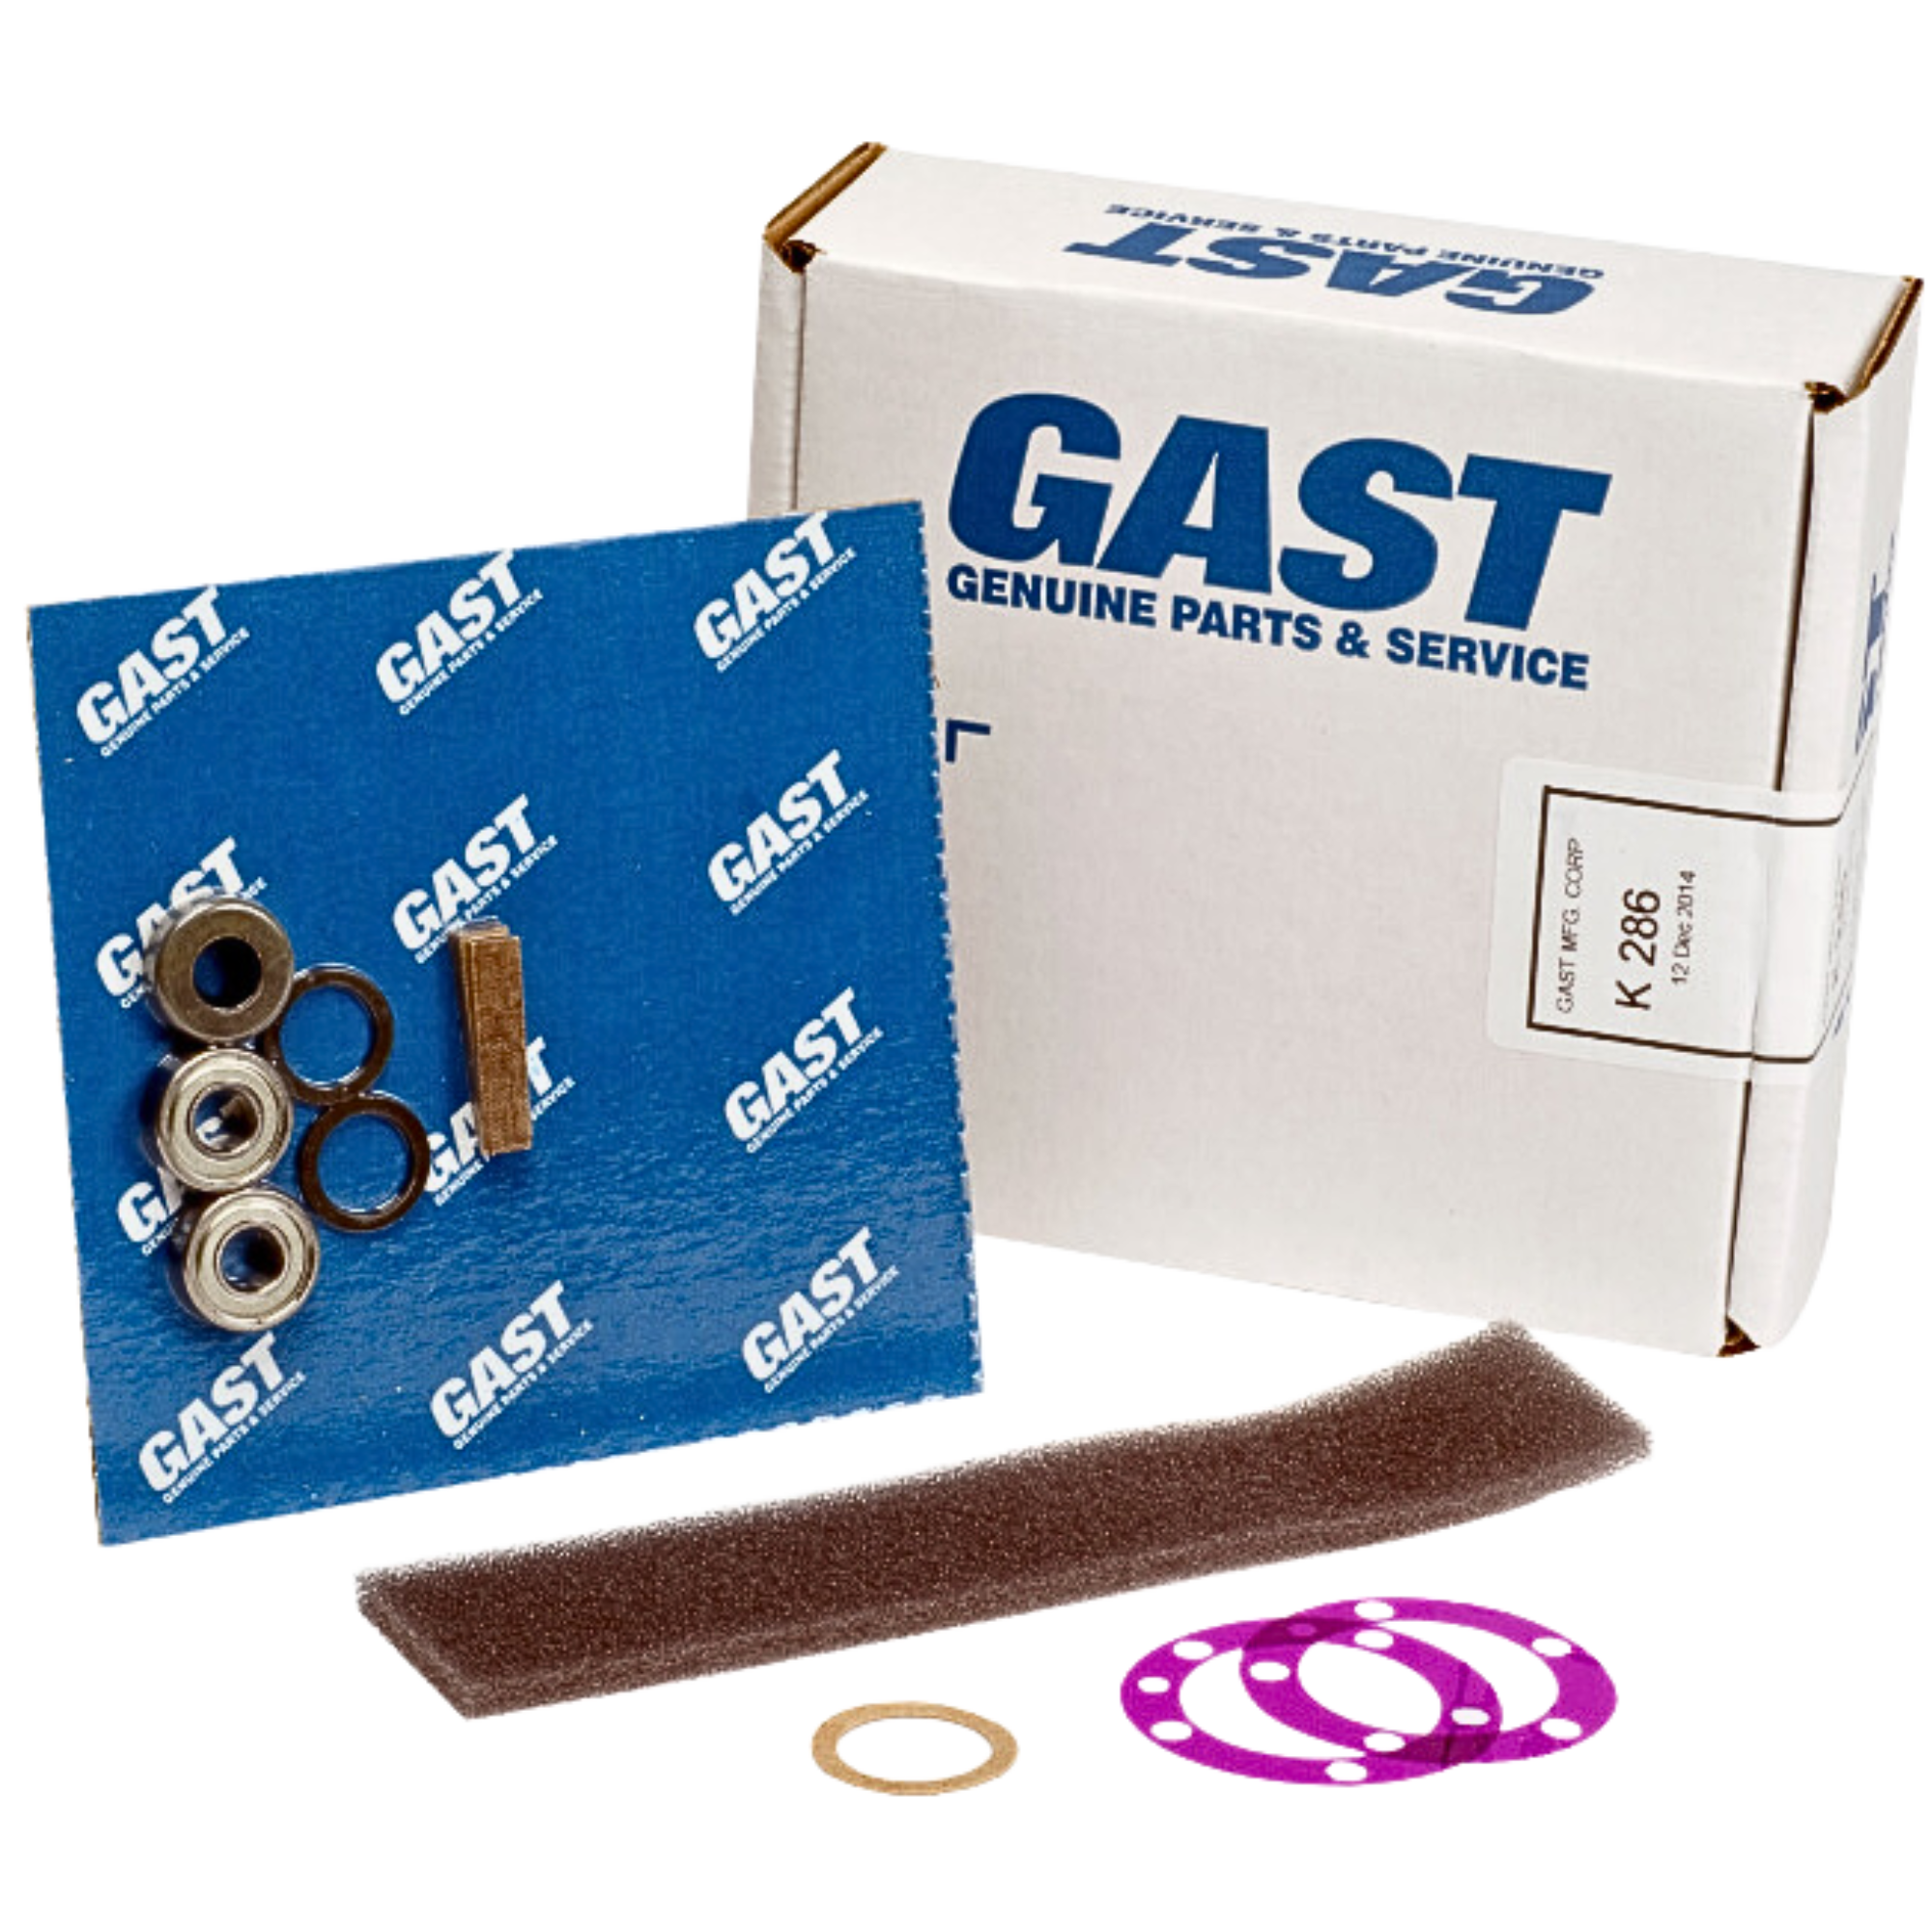 Gast | 1UP Service Kit | K286 used on gast product line